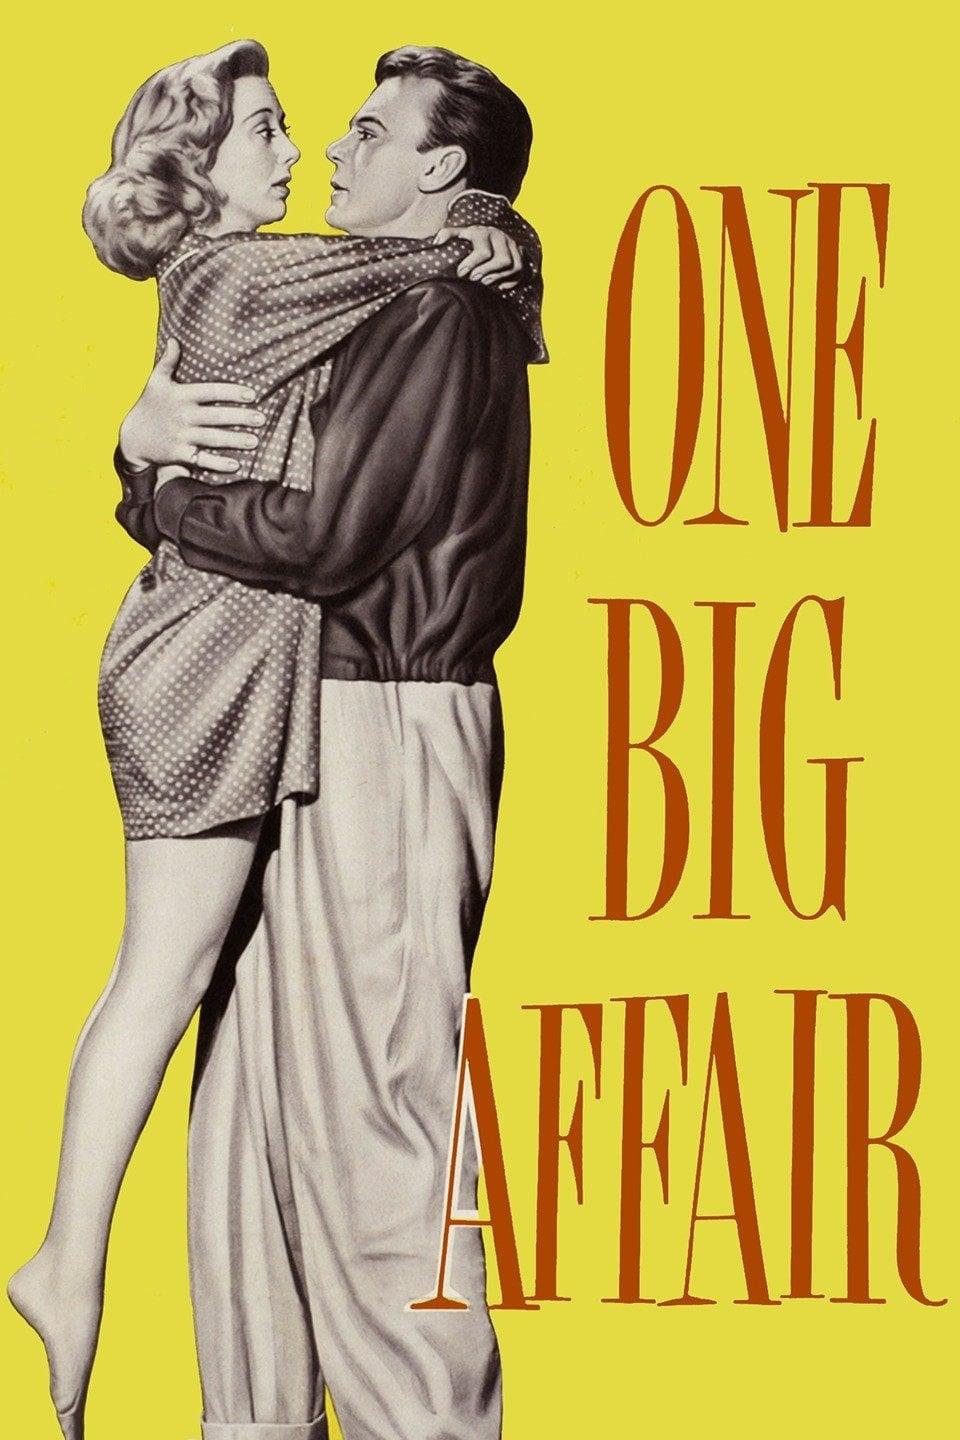 One Big Affair poster